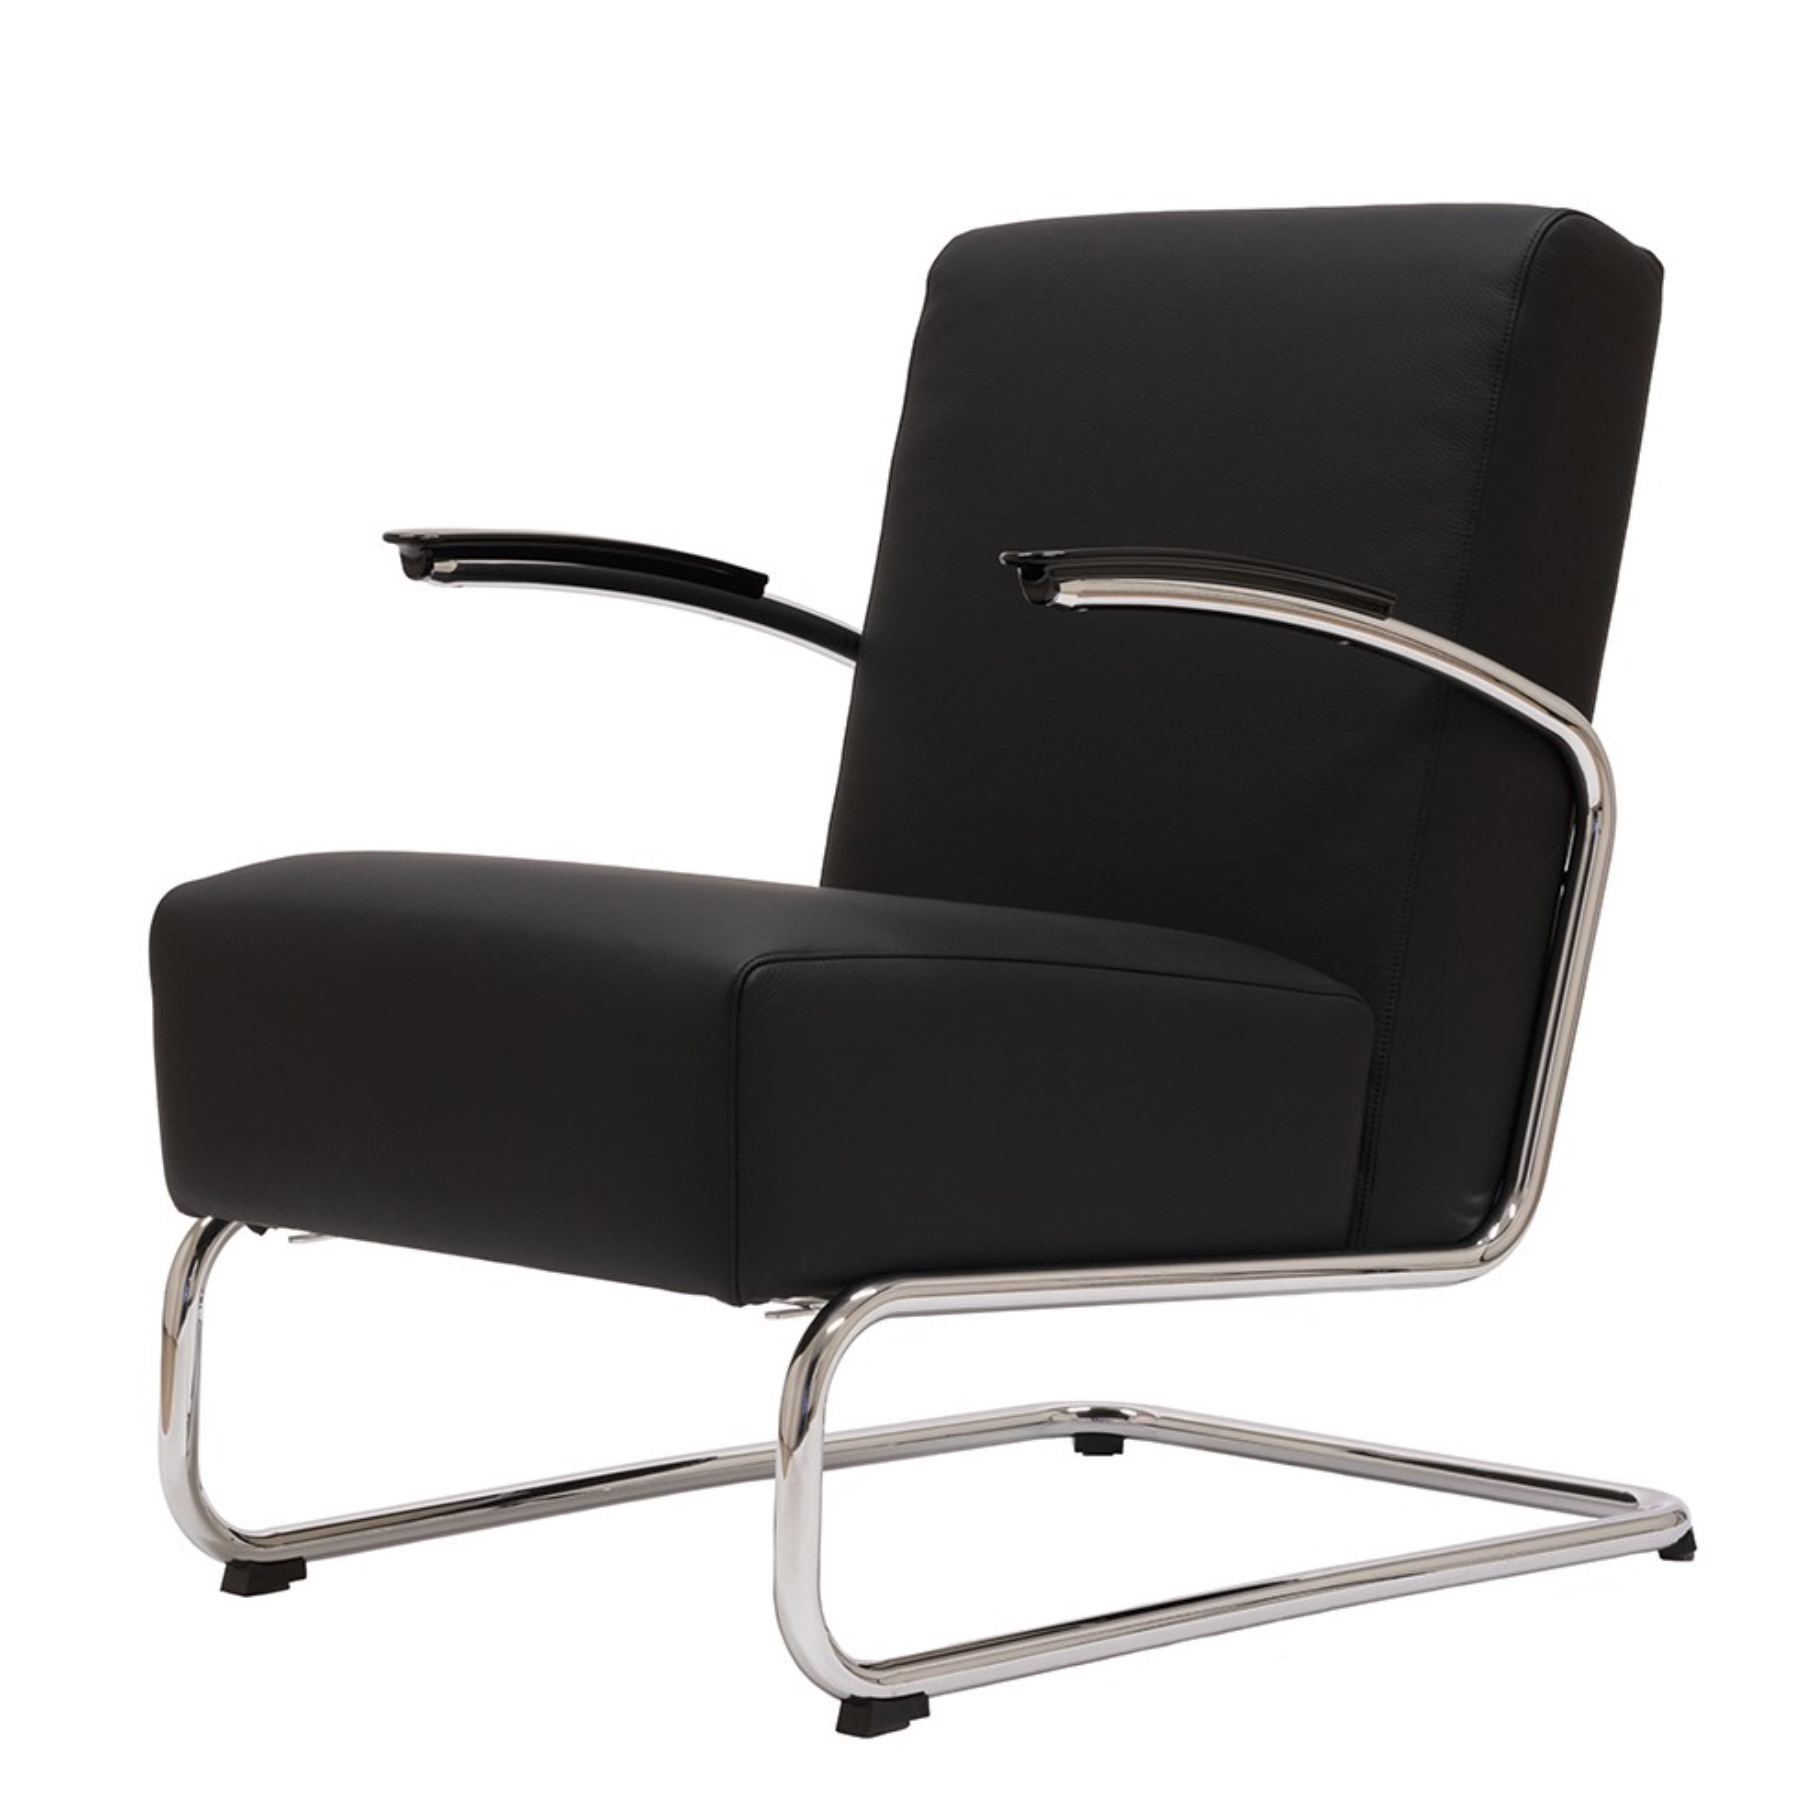 Dutch Originals Easy chair GISPEN 405LA